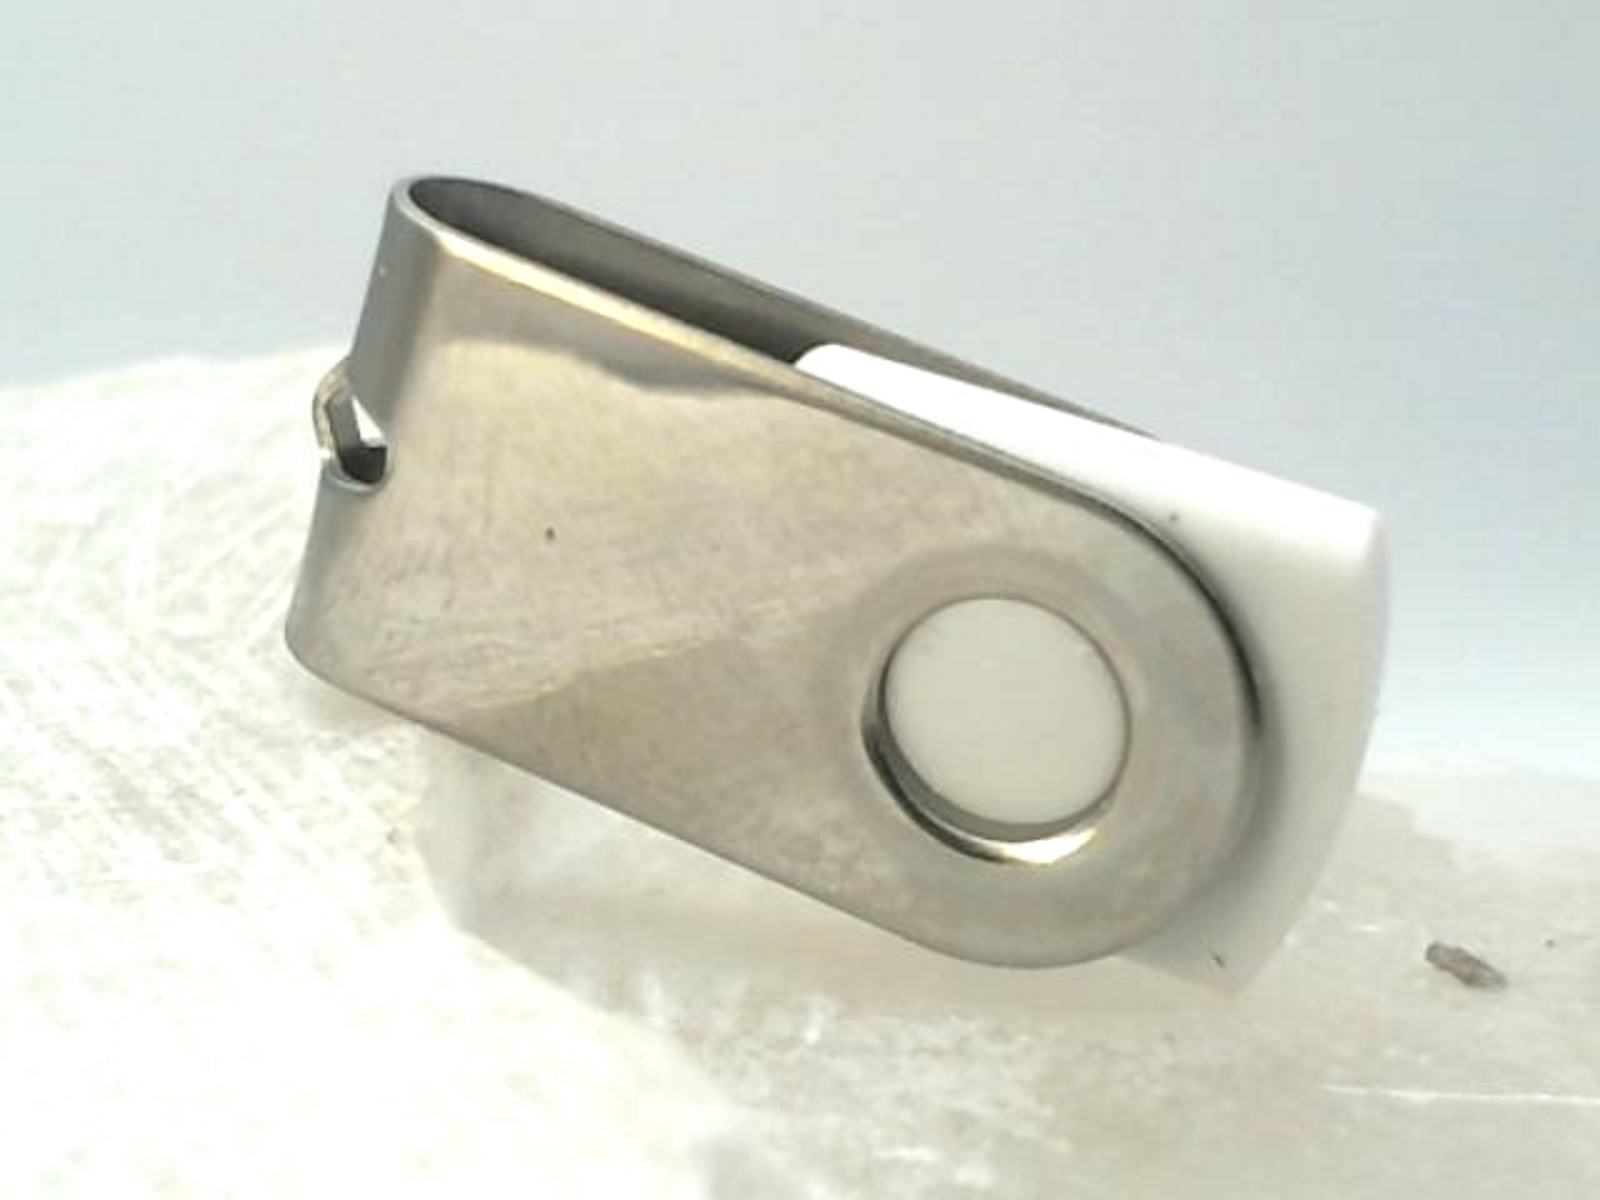 USB-Stick MINI-SWIVEL GERMANY GB) (Weiß-Chrome, USB ® 64